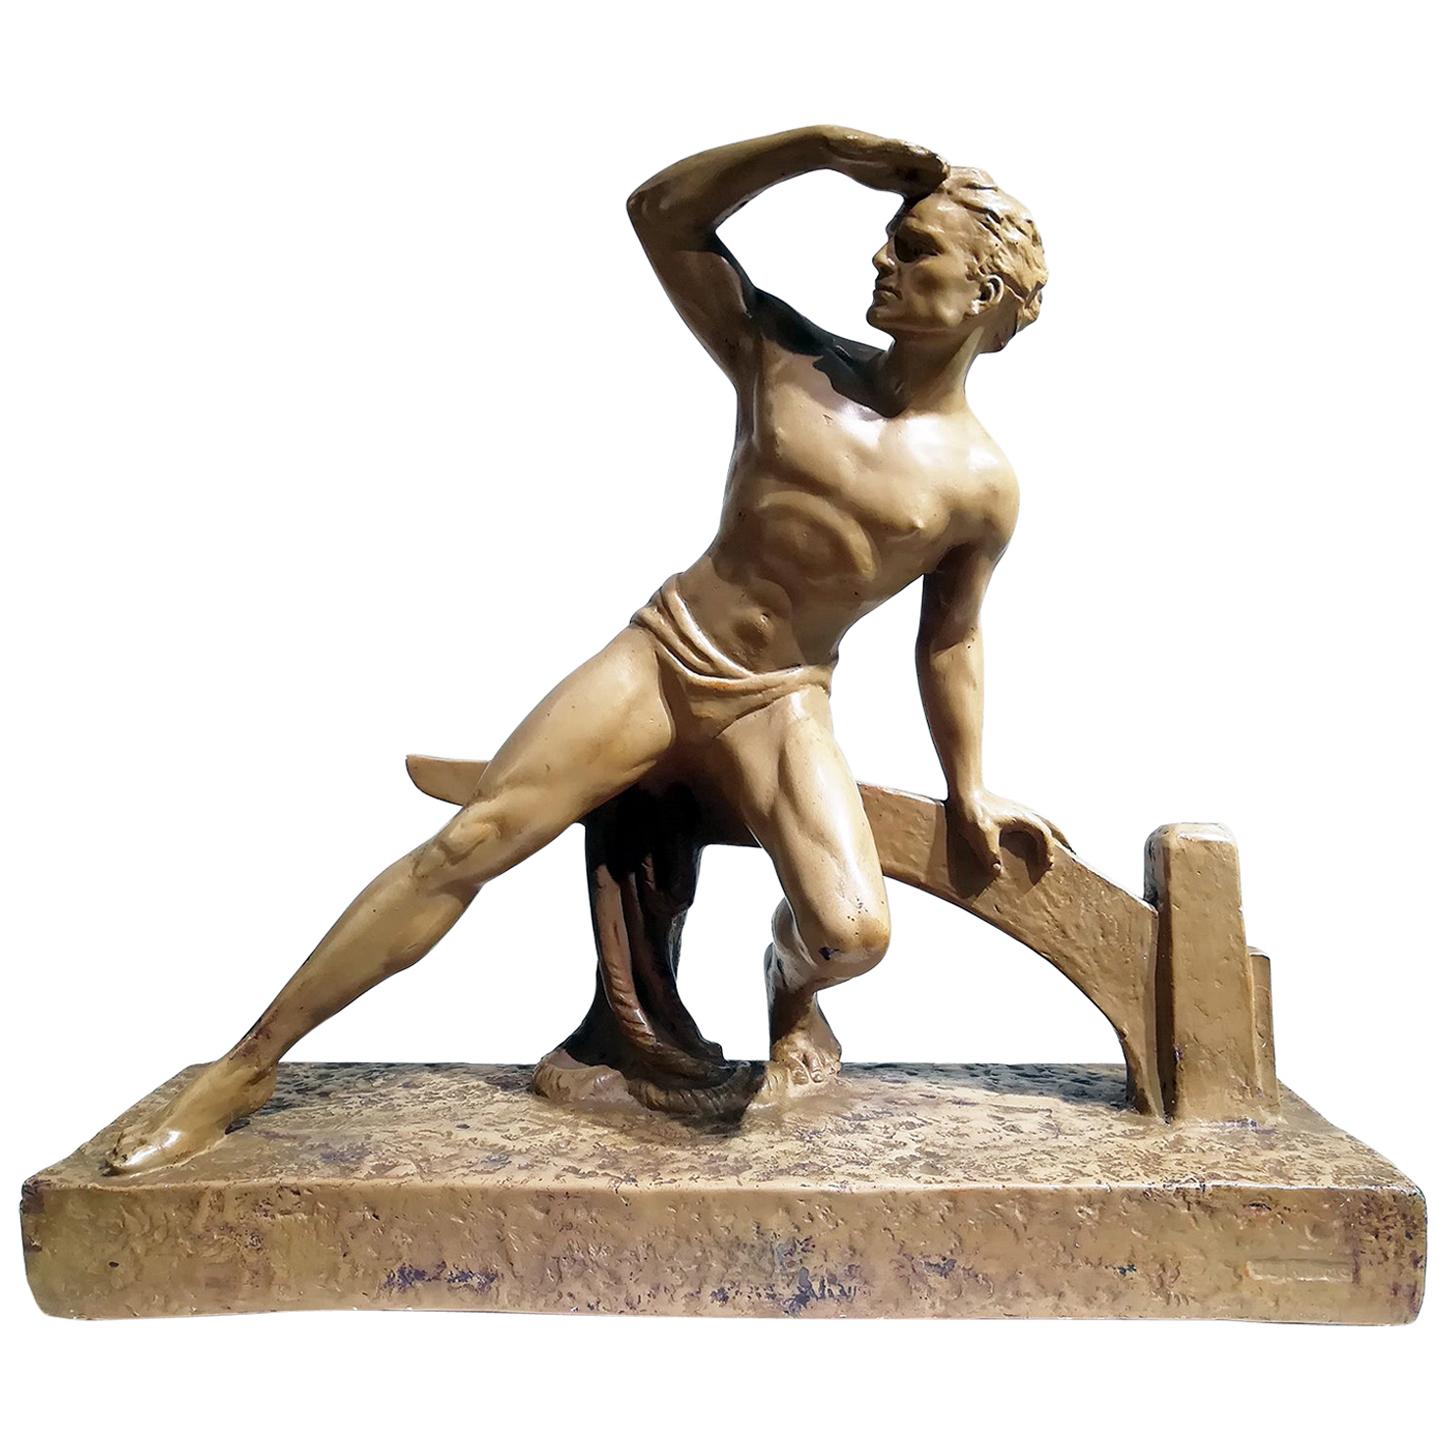 “Athlete” Terracotta Sculpture Signed "Le Lourme" For Sale